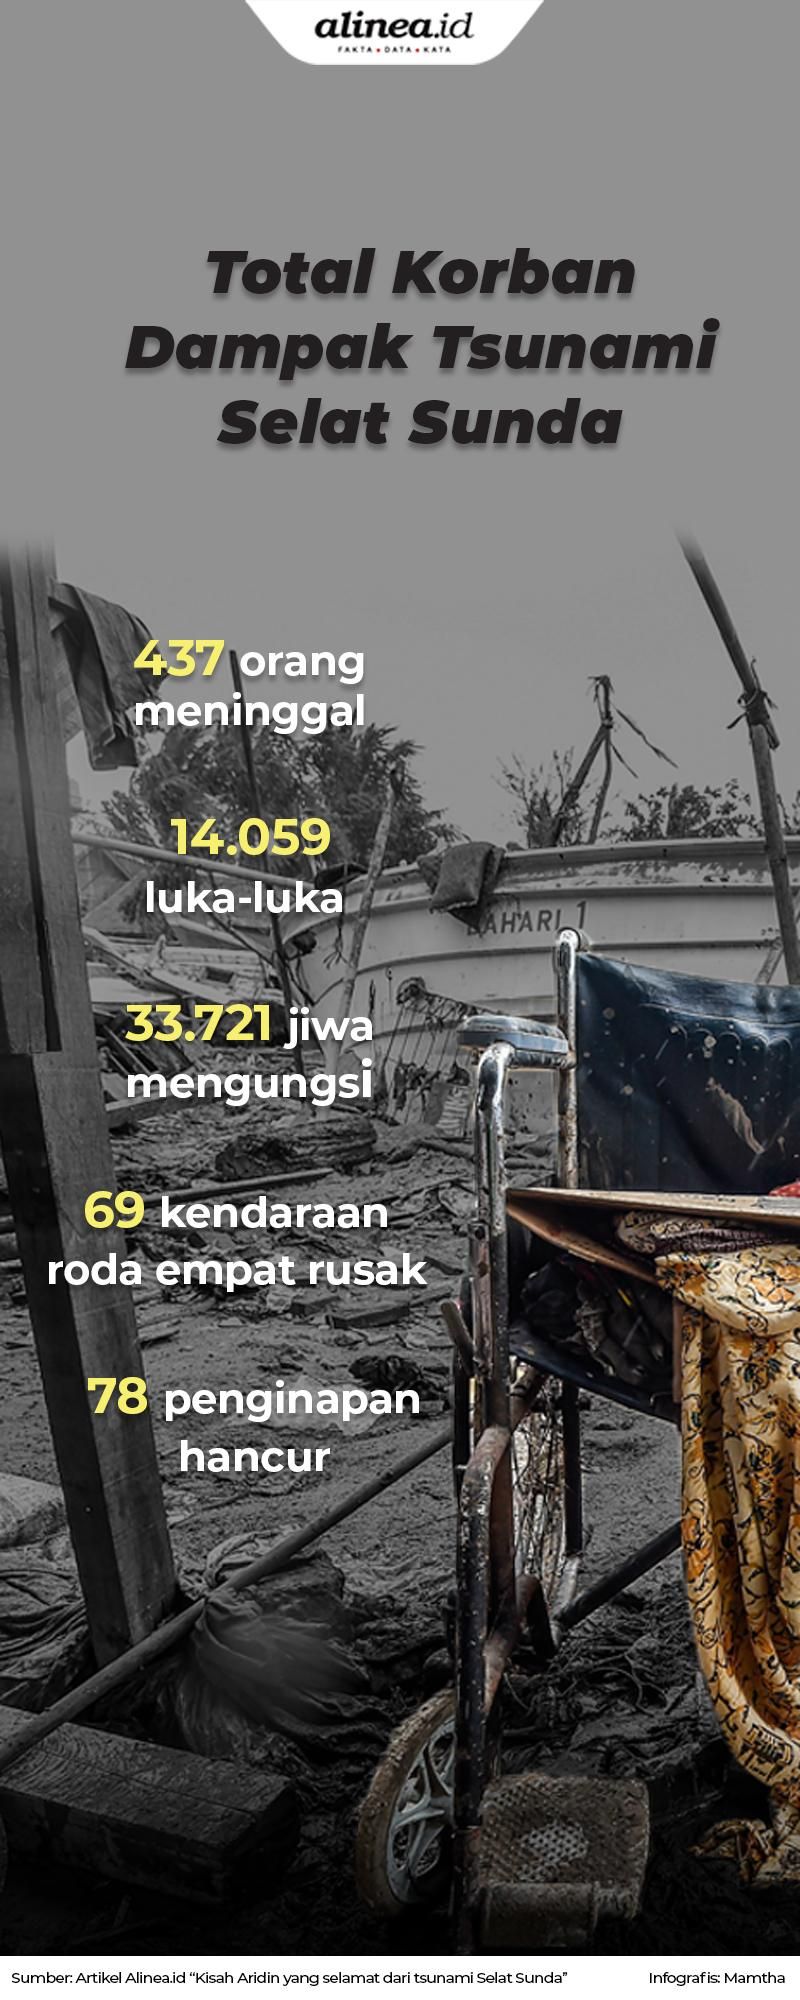 Total korban dampak tsunami Selat Sunda. Alinea.id.